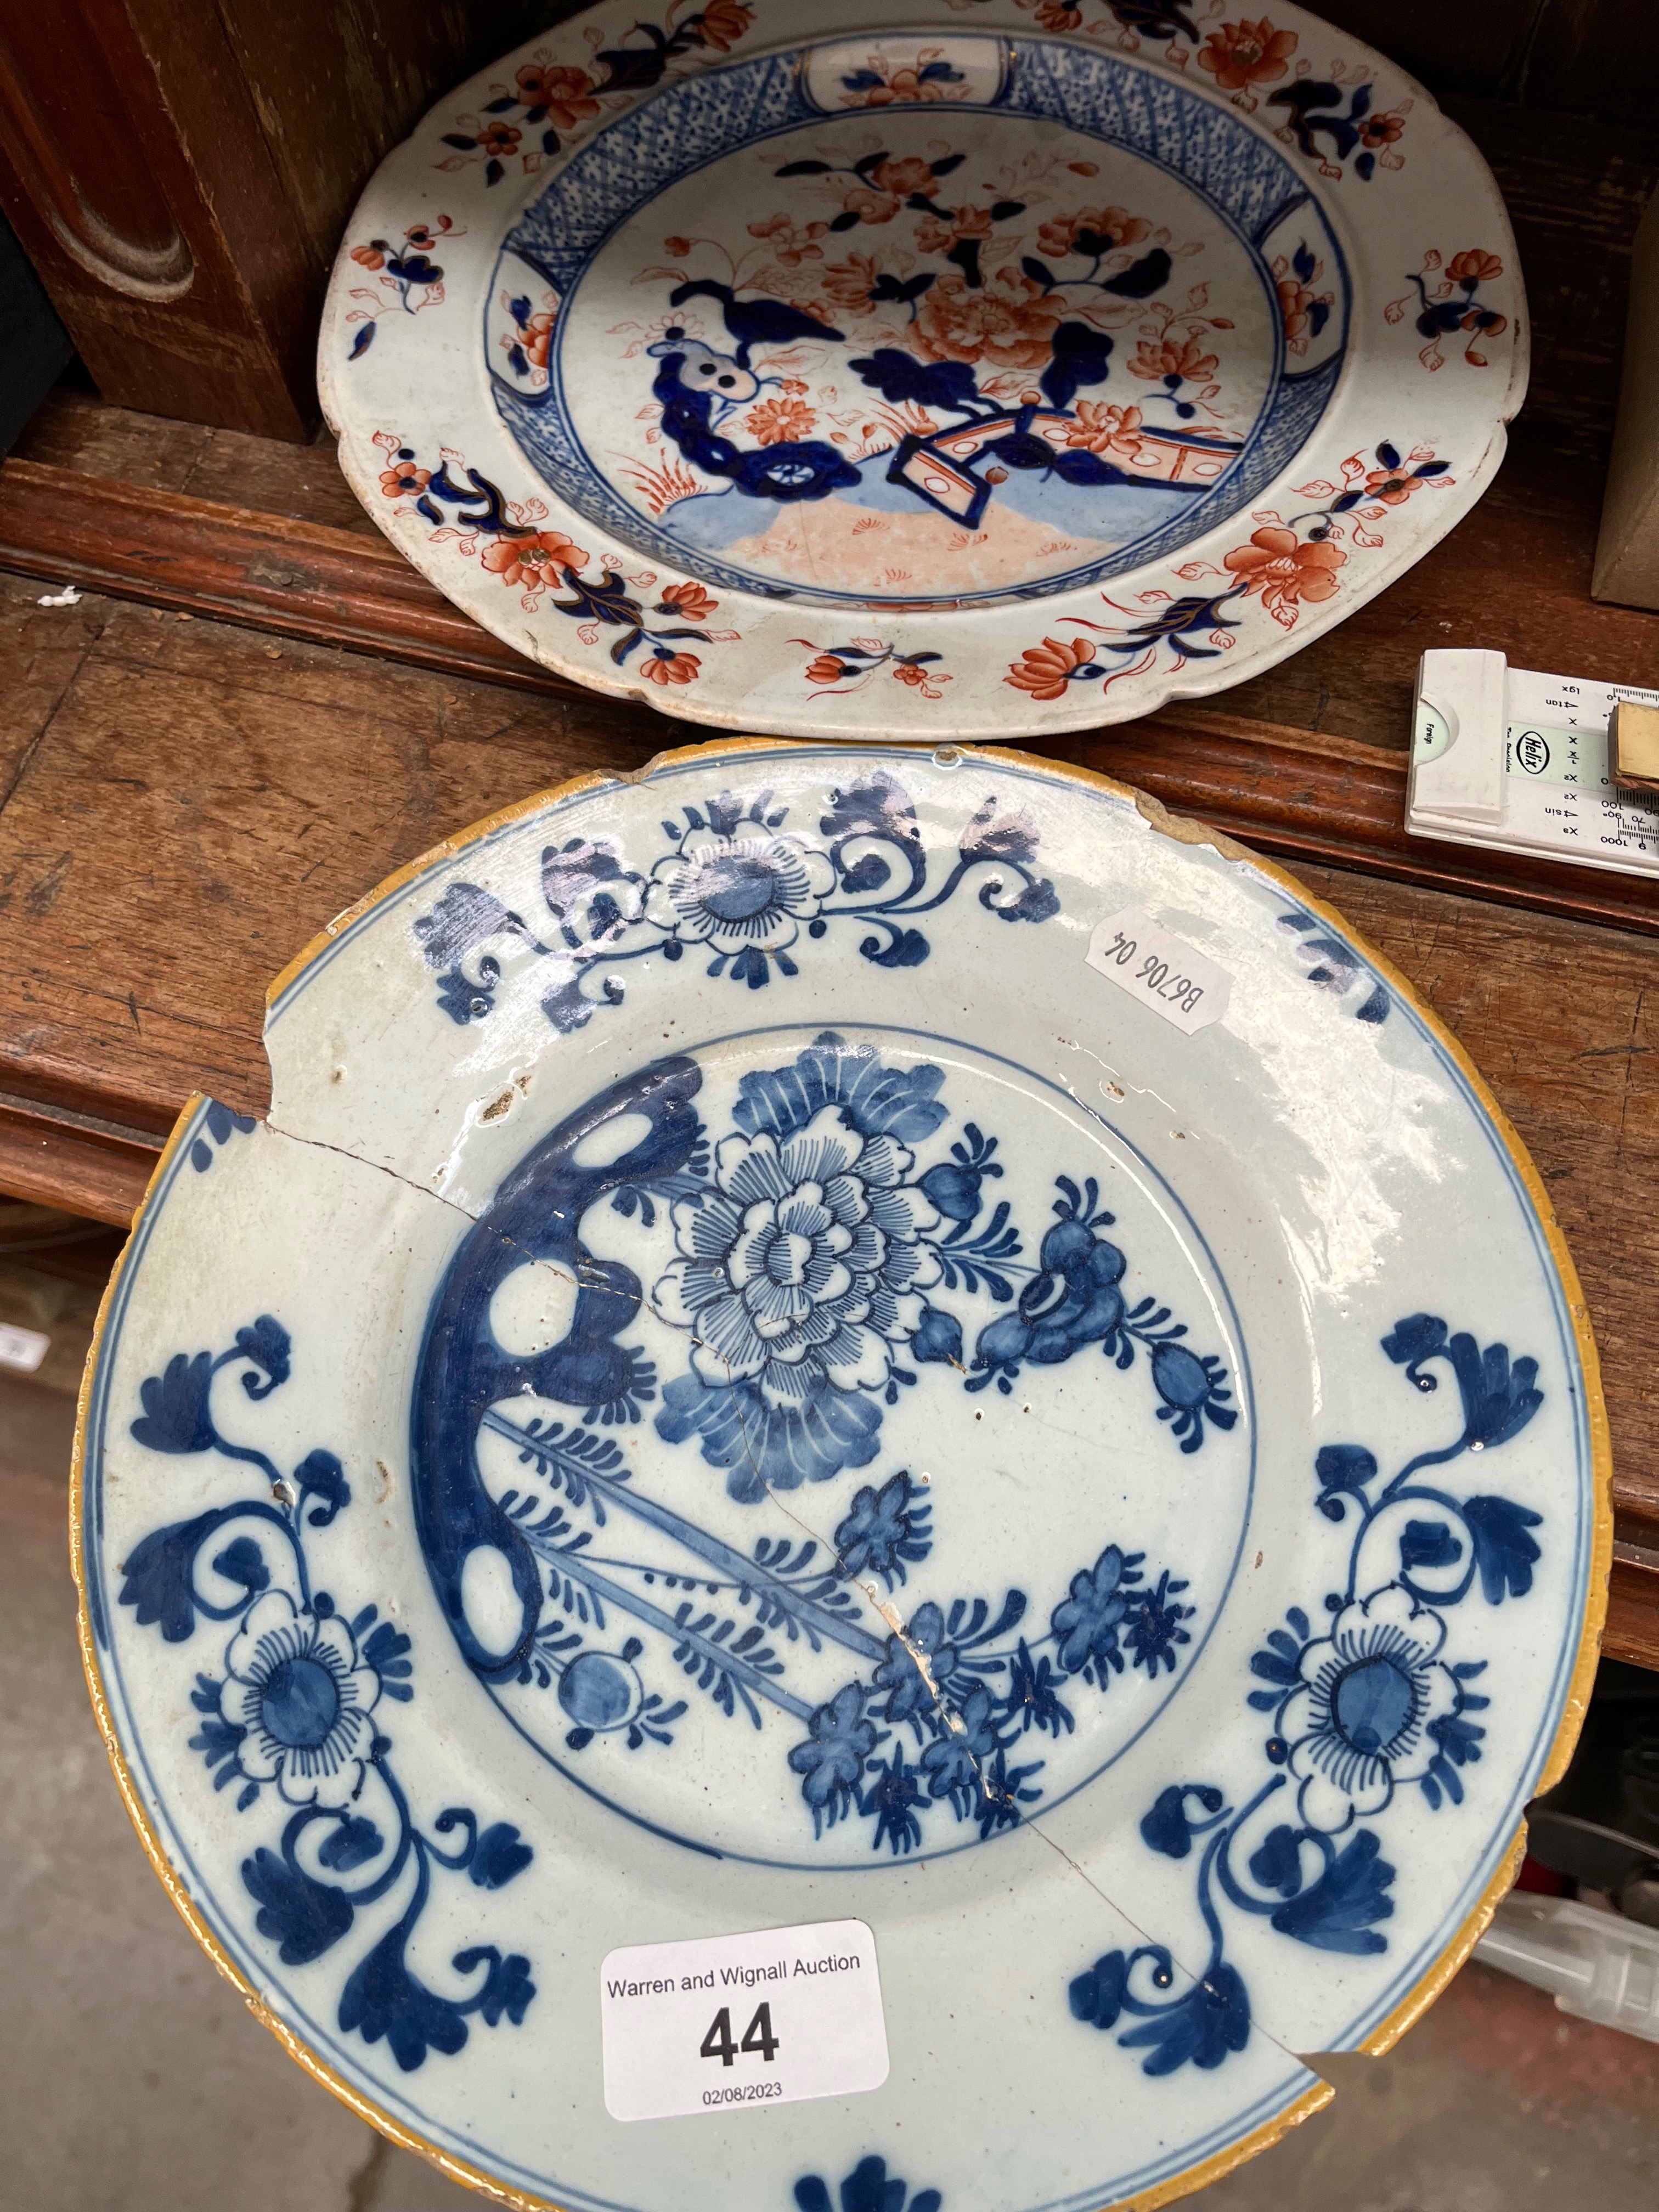 Two 18th century Dutch delft plates.